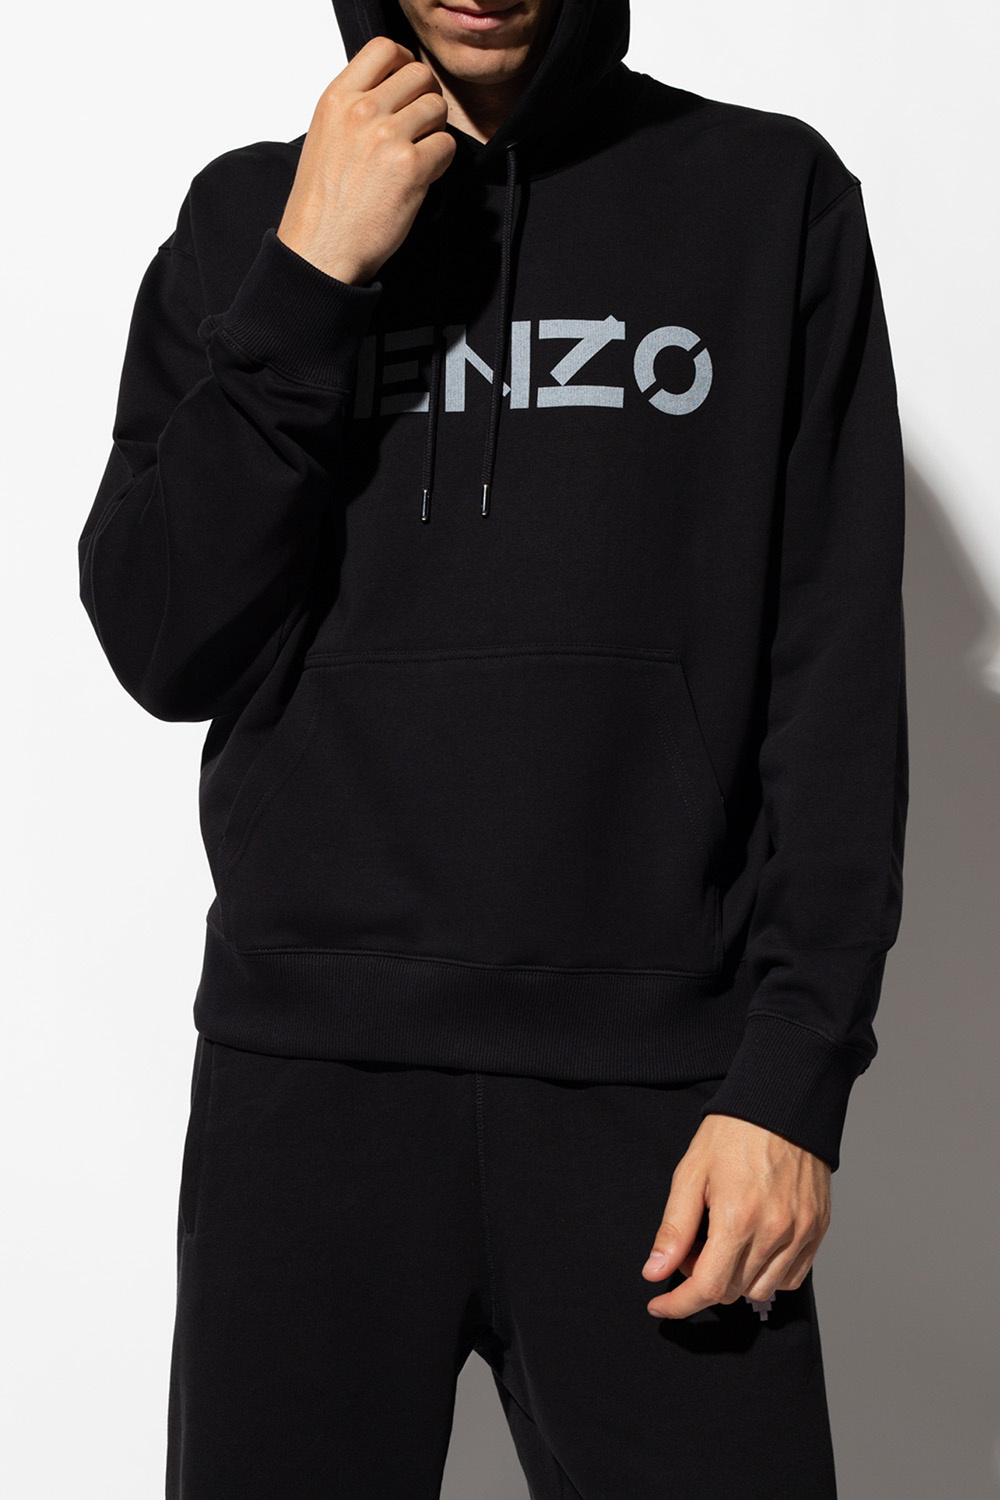 Kenzo hoodie school with logo